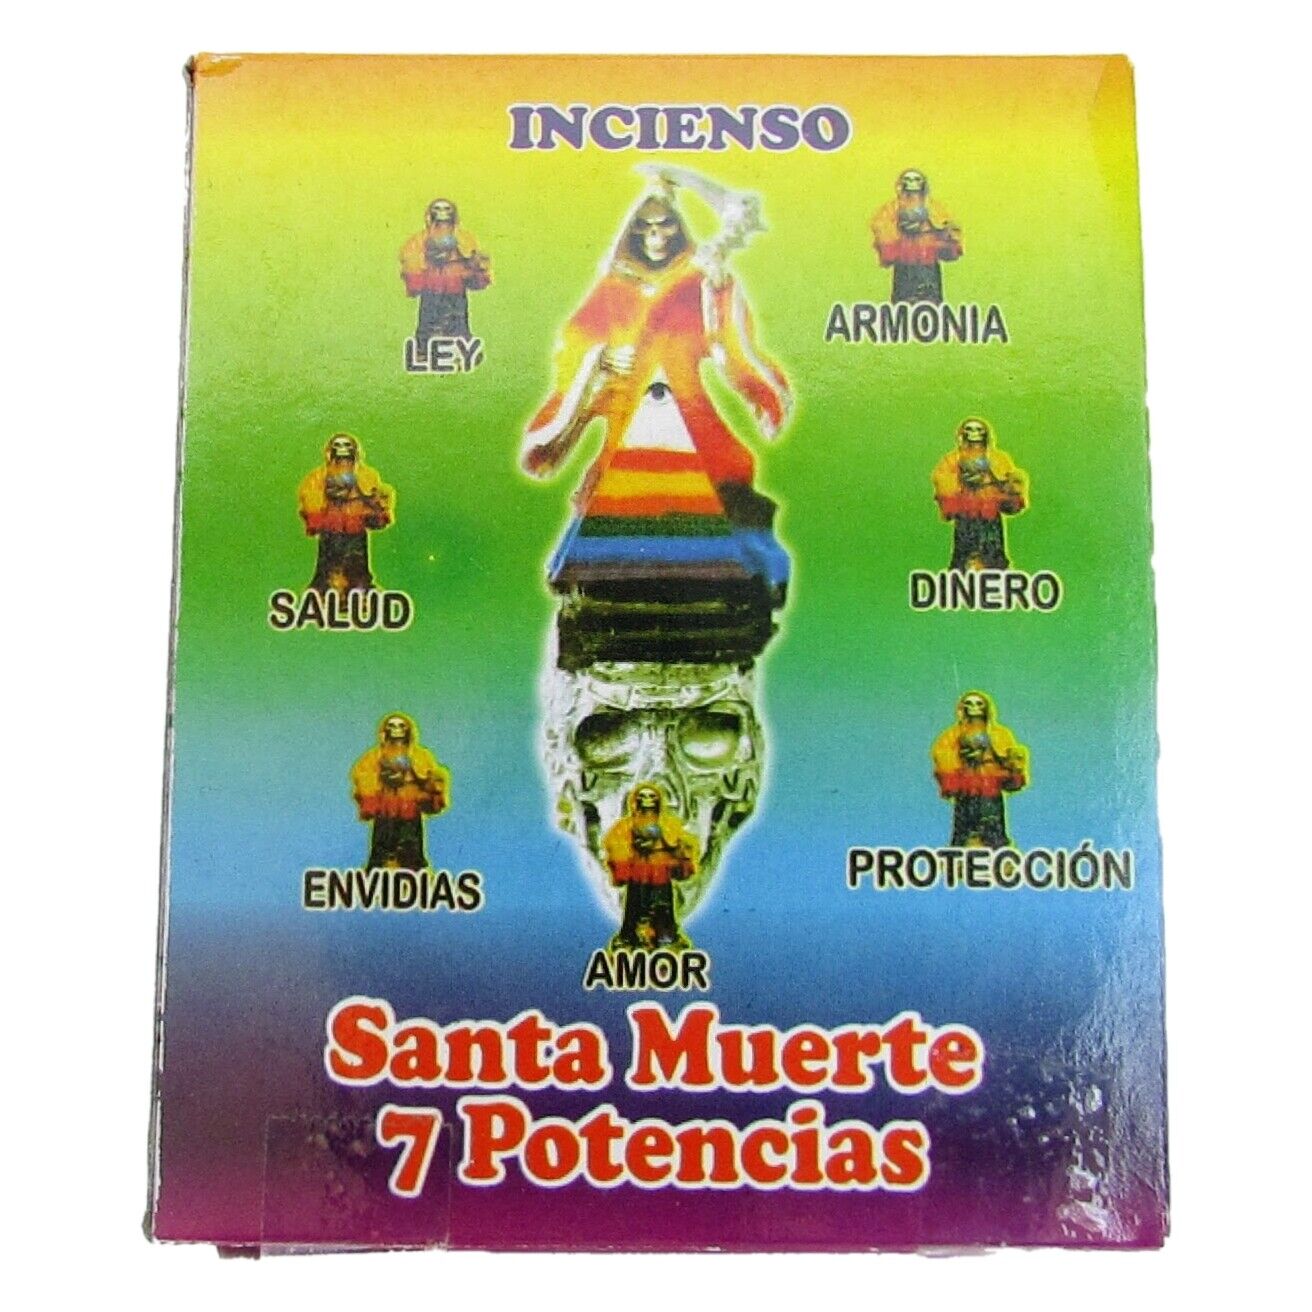 Incienso Ritual Santa Muerte 7 Potencias / Ritual Incense Holy Death 7 Powers